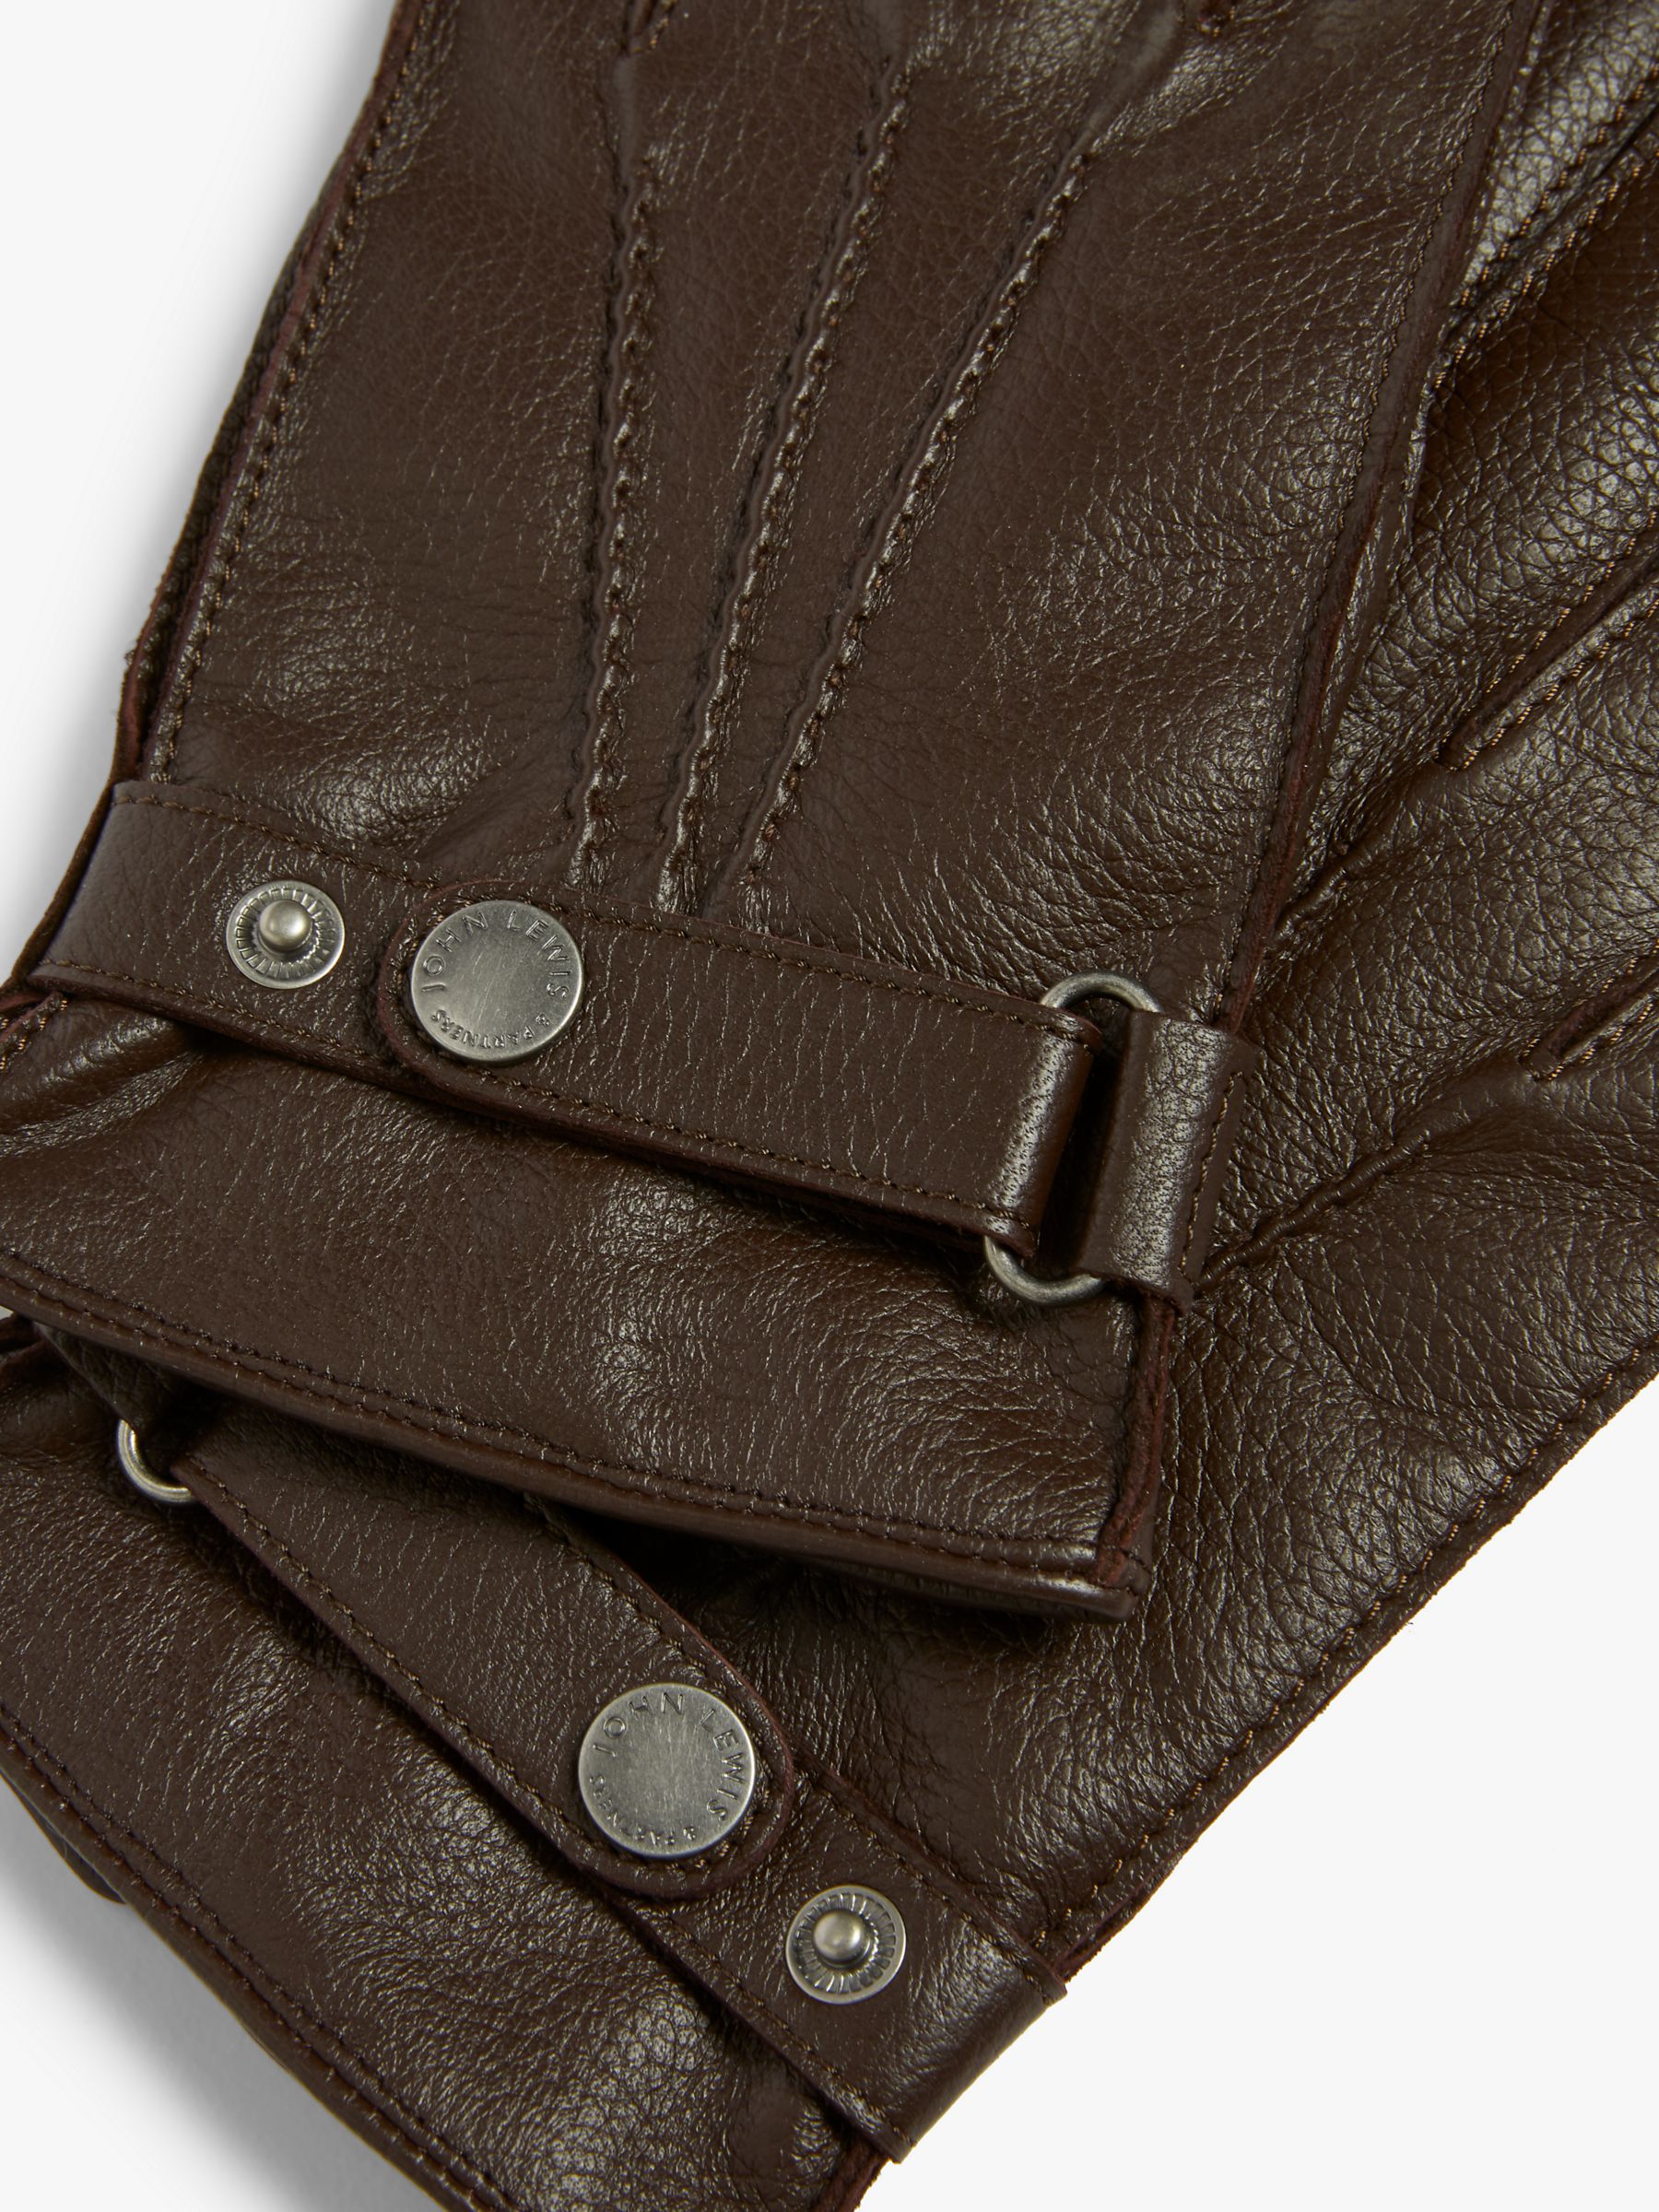 John Lewis Premium Leather Gloves, Brown, S